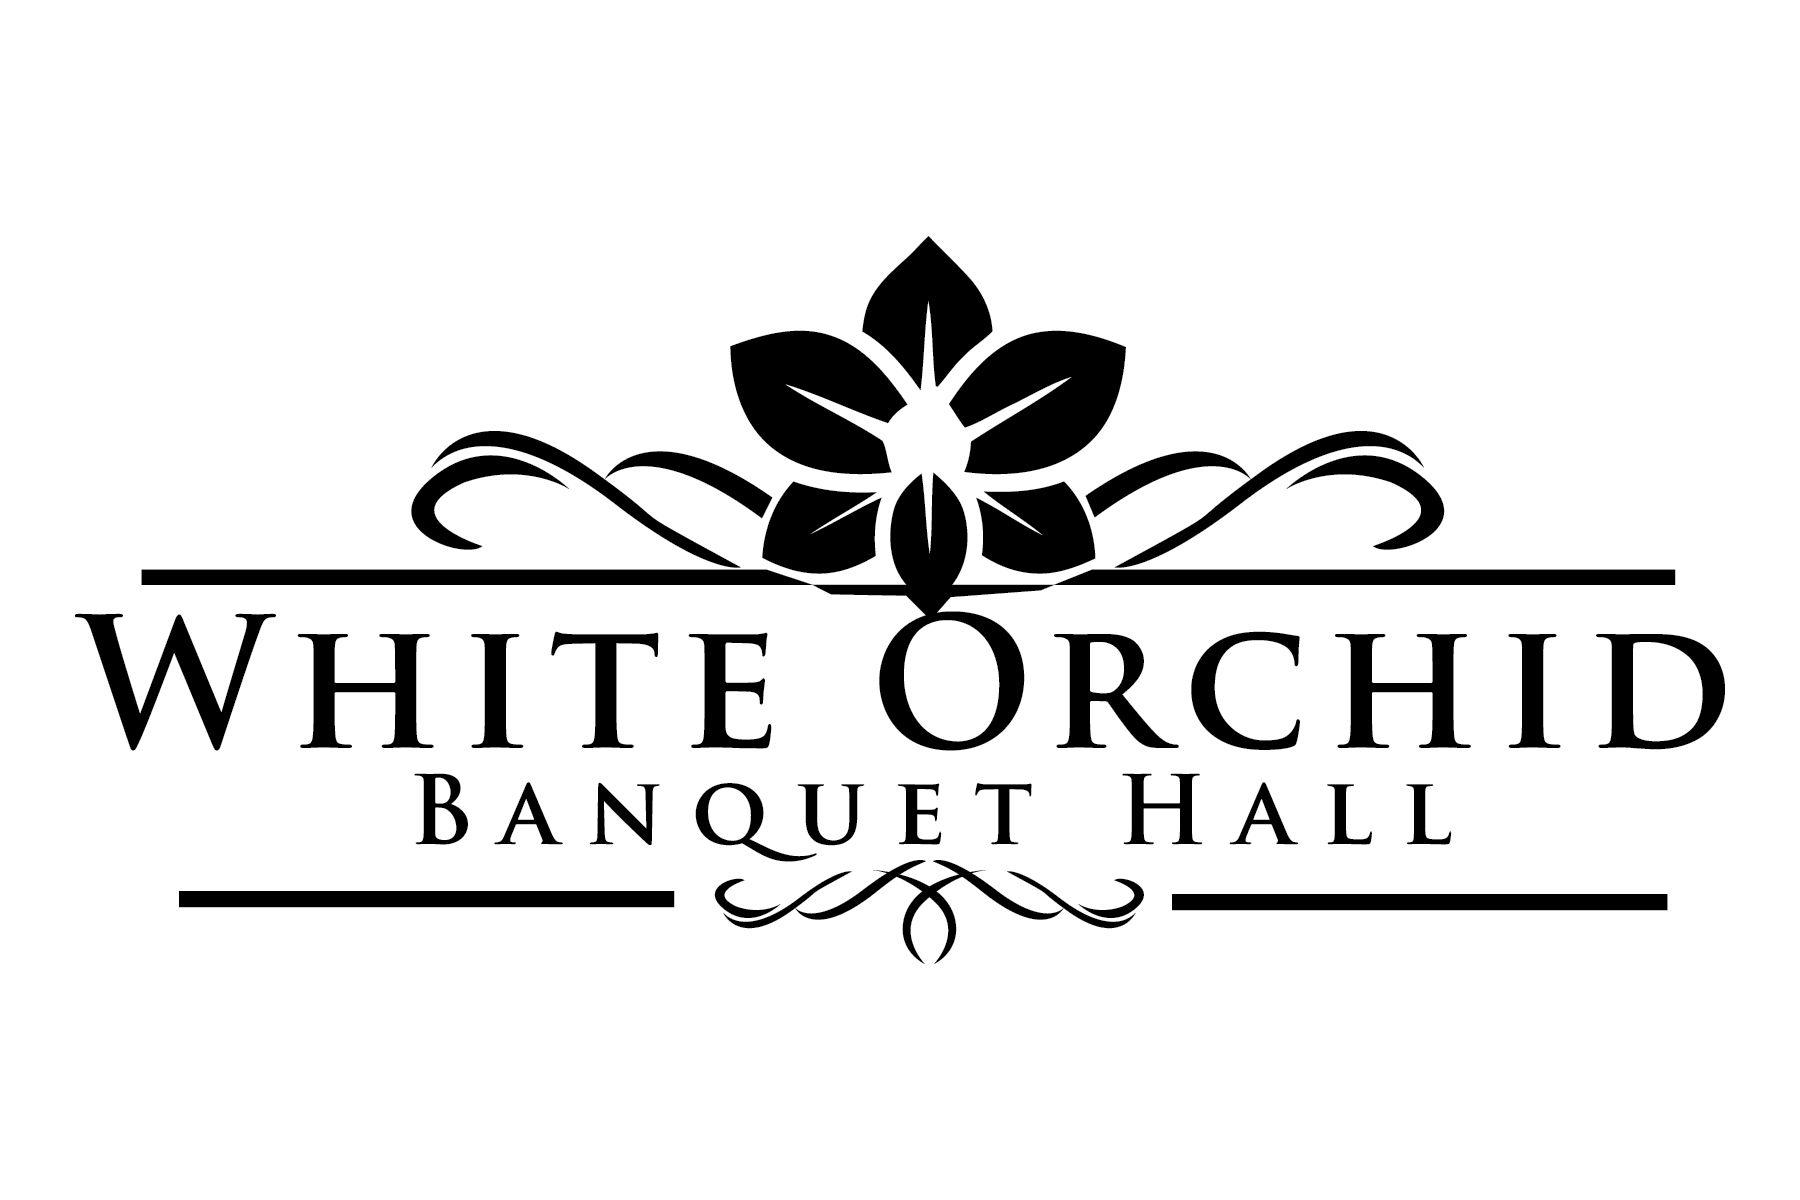 Логотип холл. Орхидея лого. Холл логотип. Орхидея эмблема логотип. Вайт Медиа логотип.